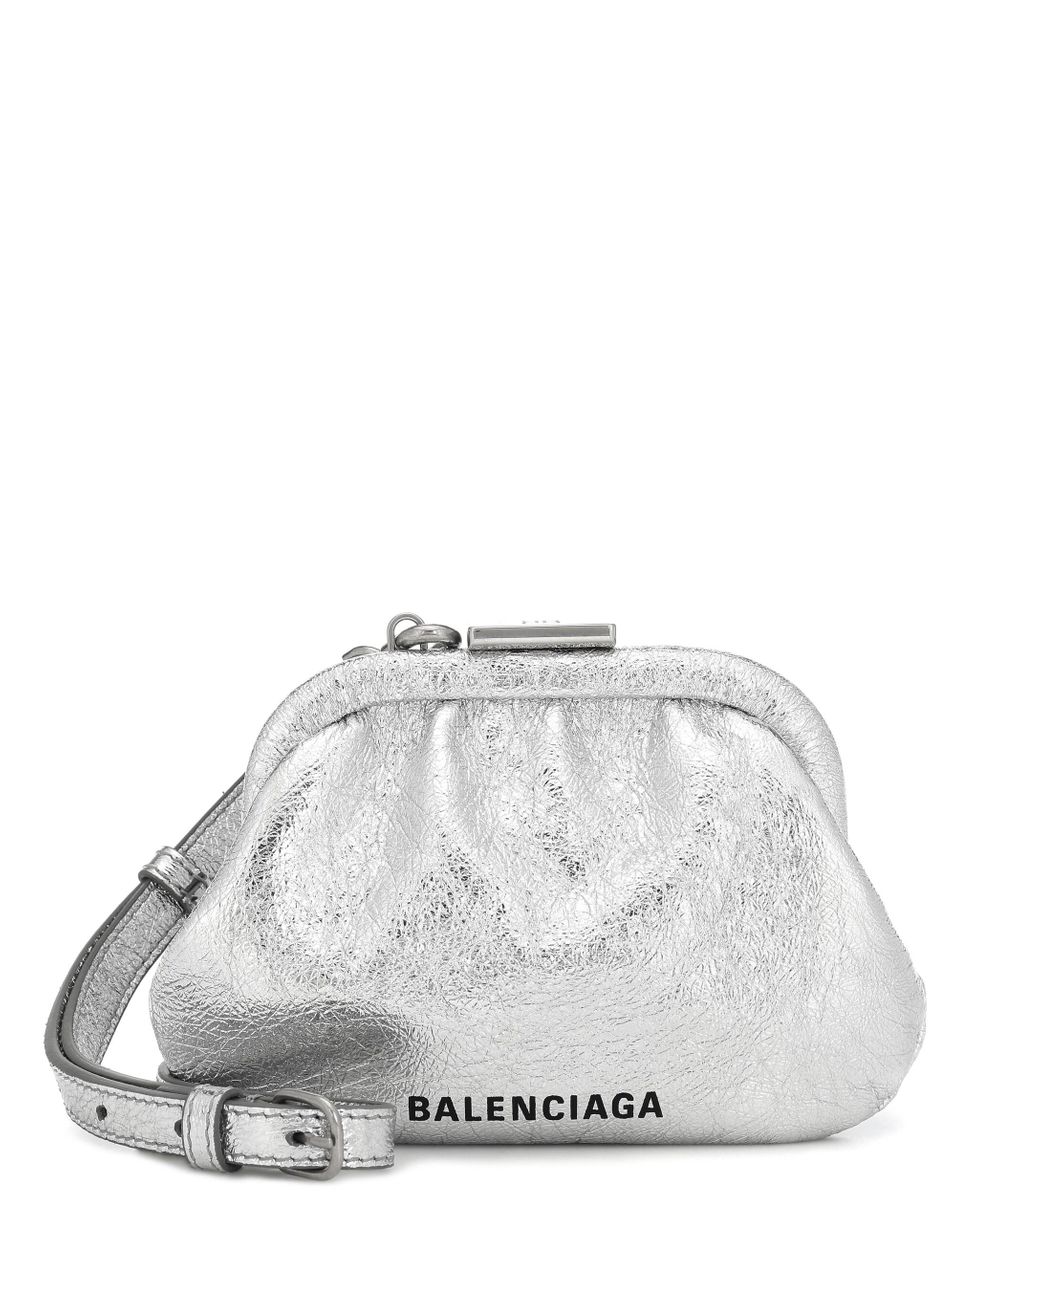 Balenciaga Cloud Xs Leather Clutch in Silver (Metallic) | Lyst